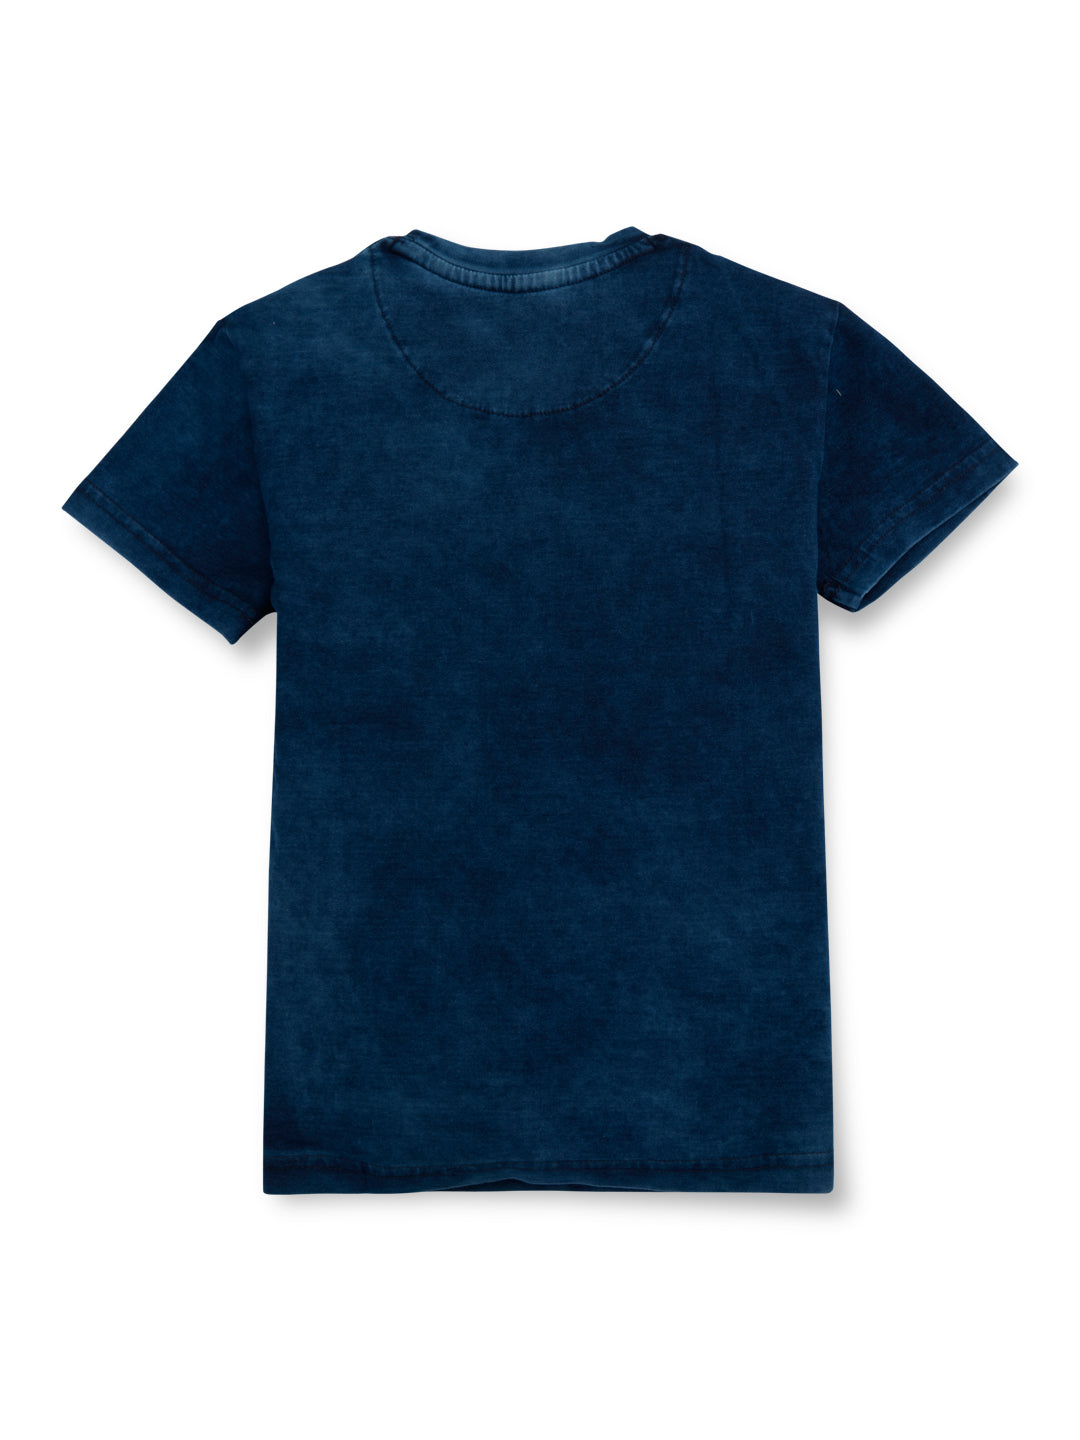 Boys Blue Solid Cotton Half Sleeves T-Shirt